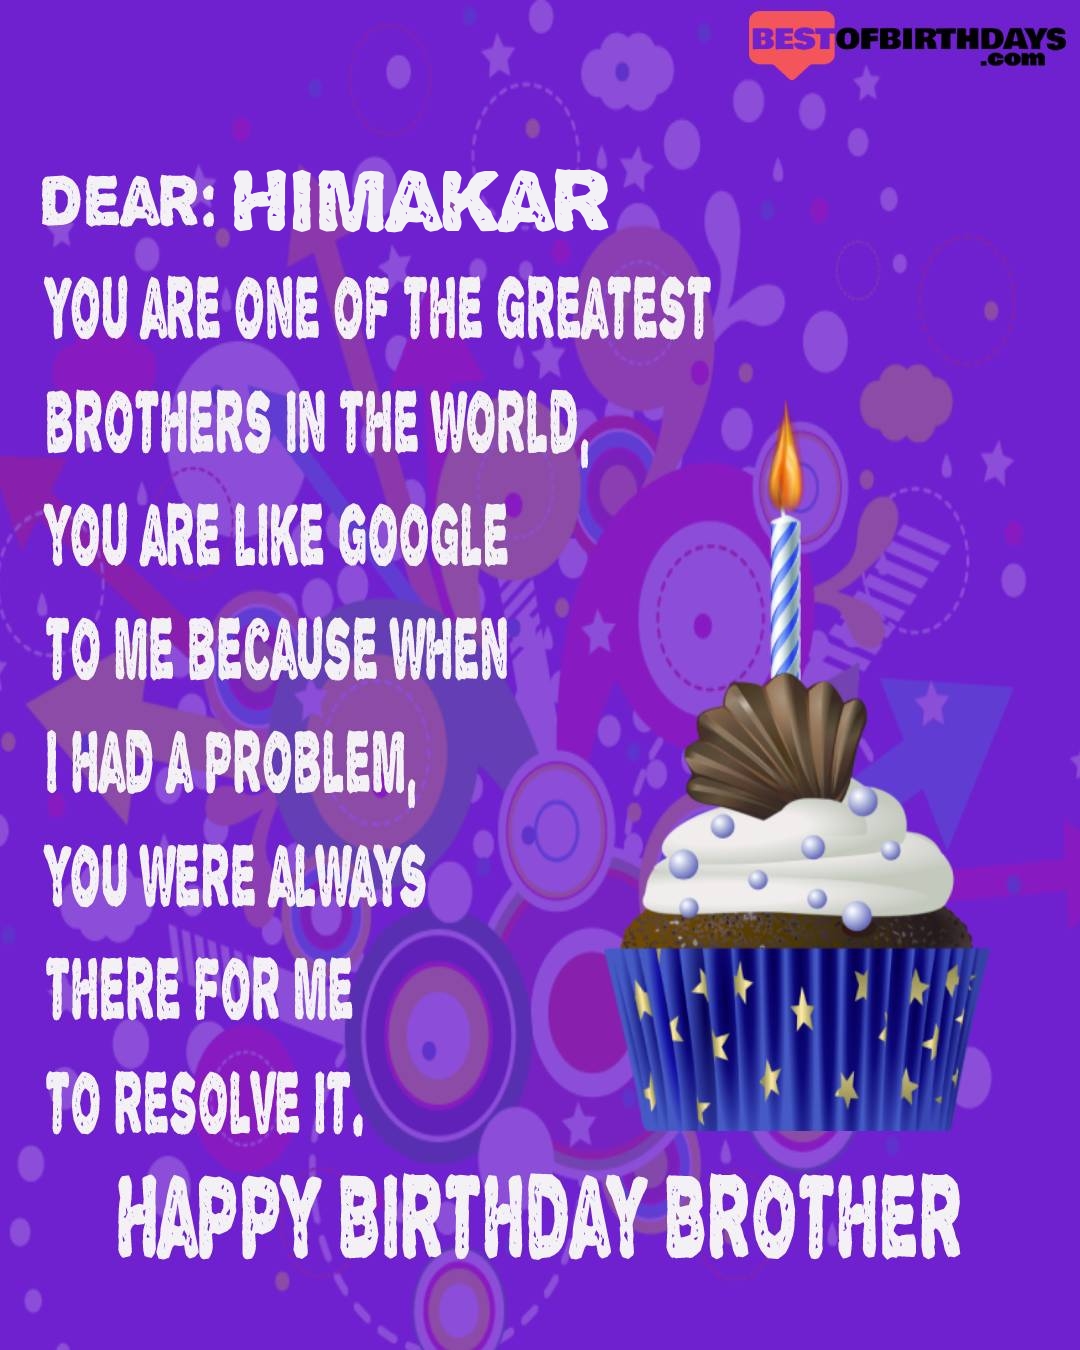 Happy birthday himakar bhai brother bro